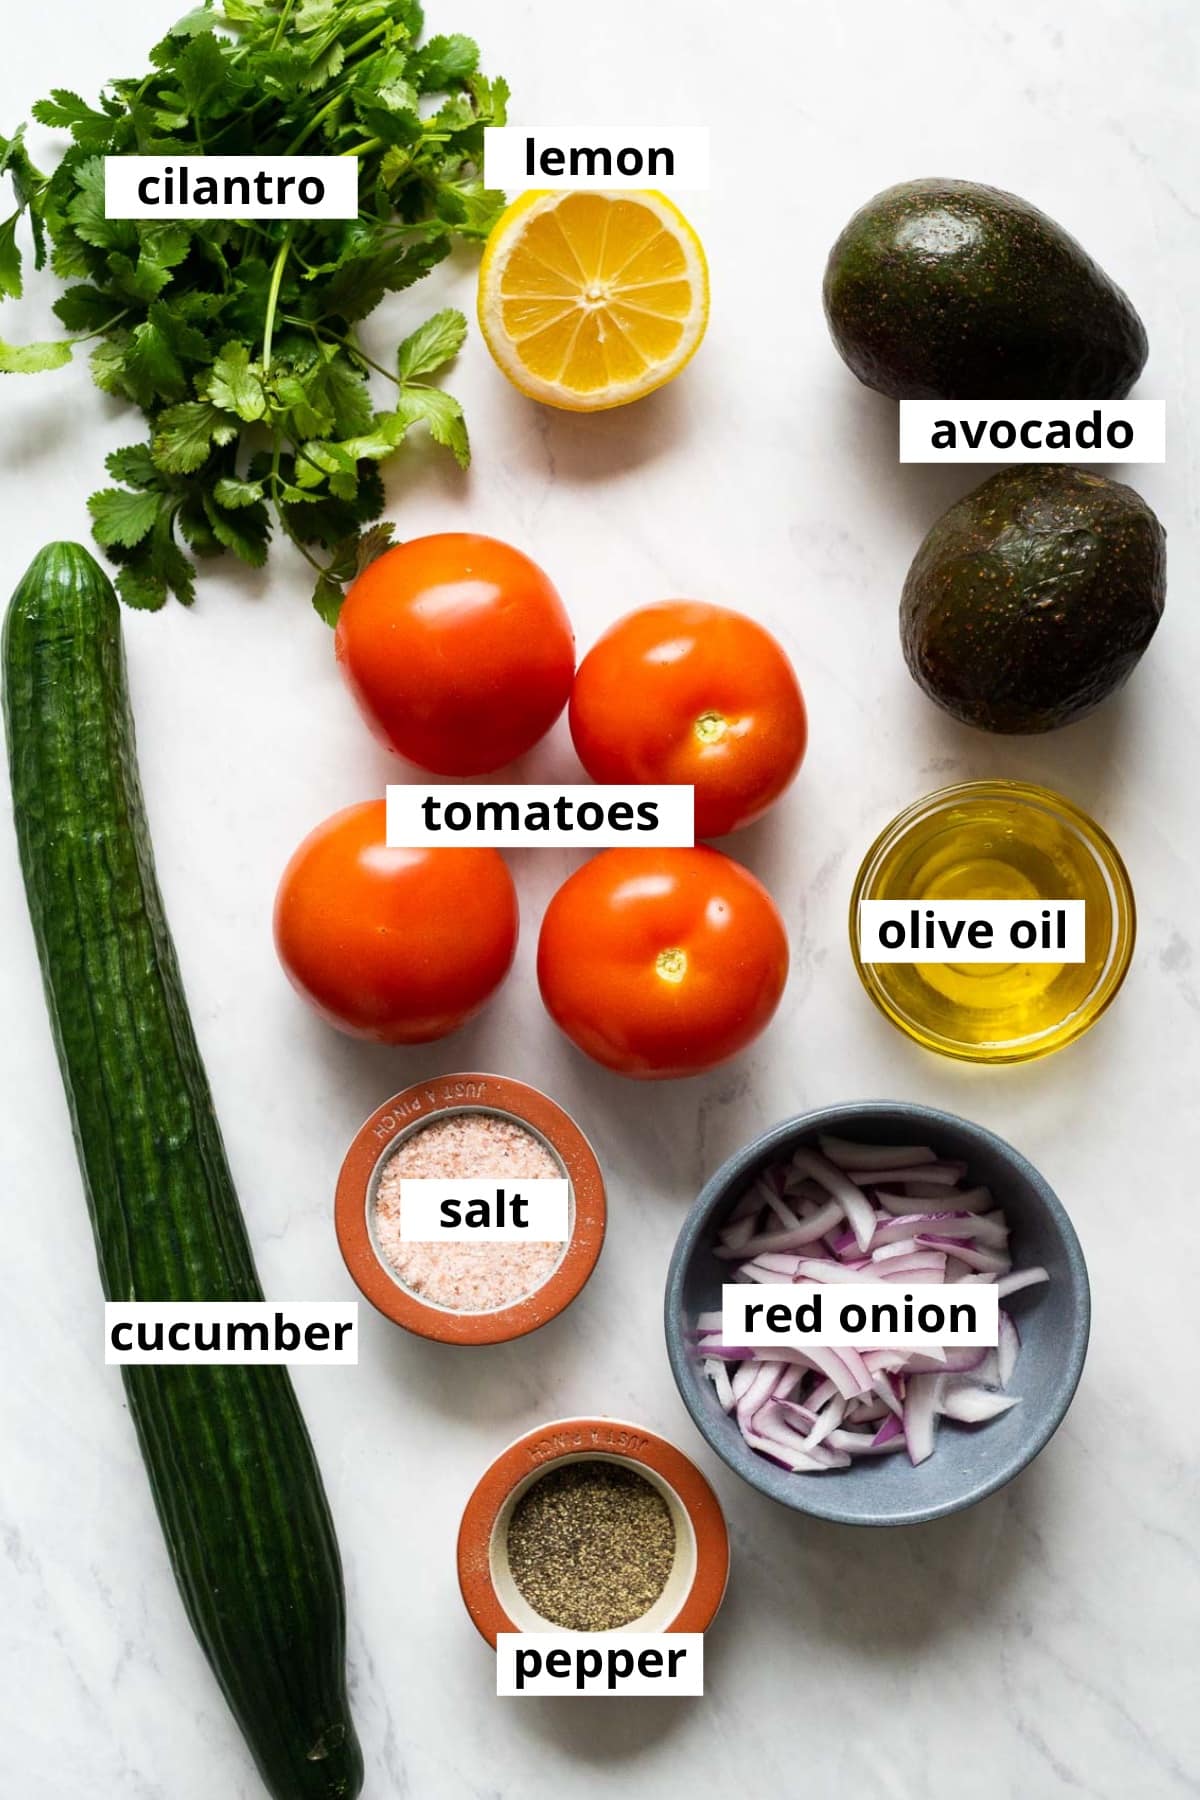 Long English cucumber, tomatoes, avocado, lemon, cilantro, red onion olive oil, salt, pepper.